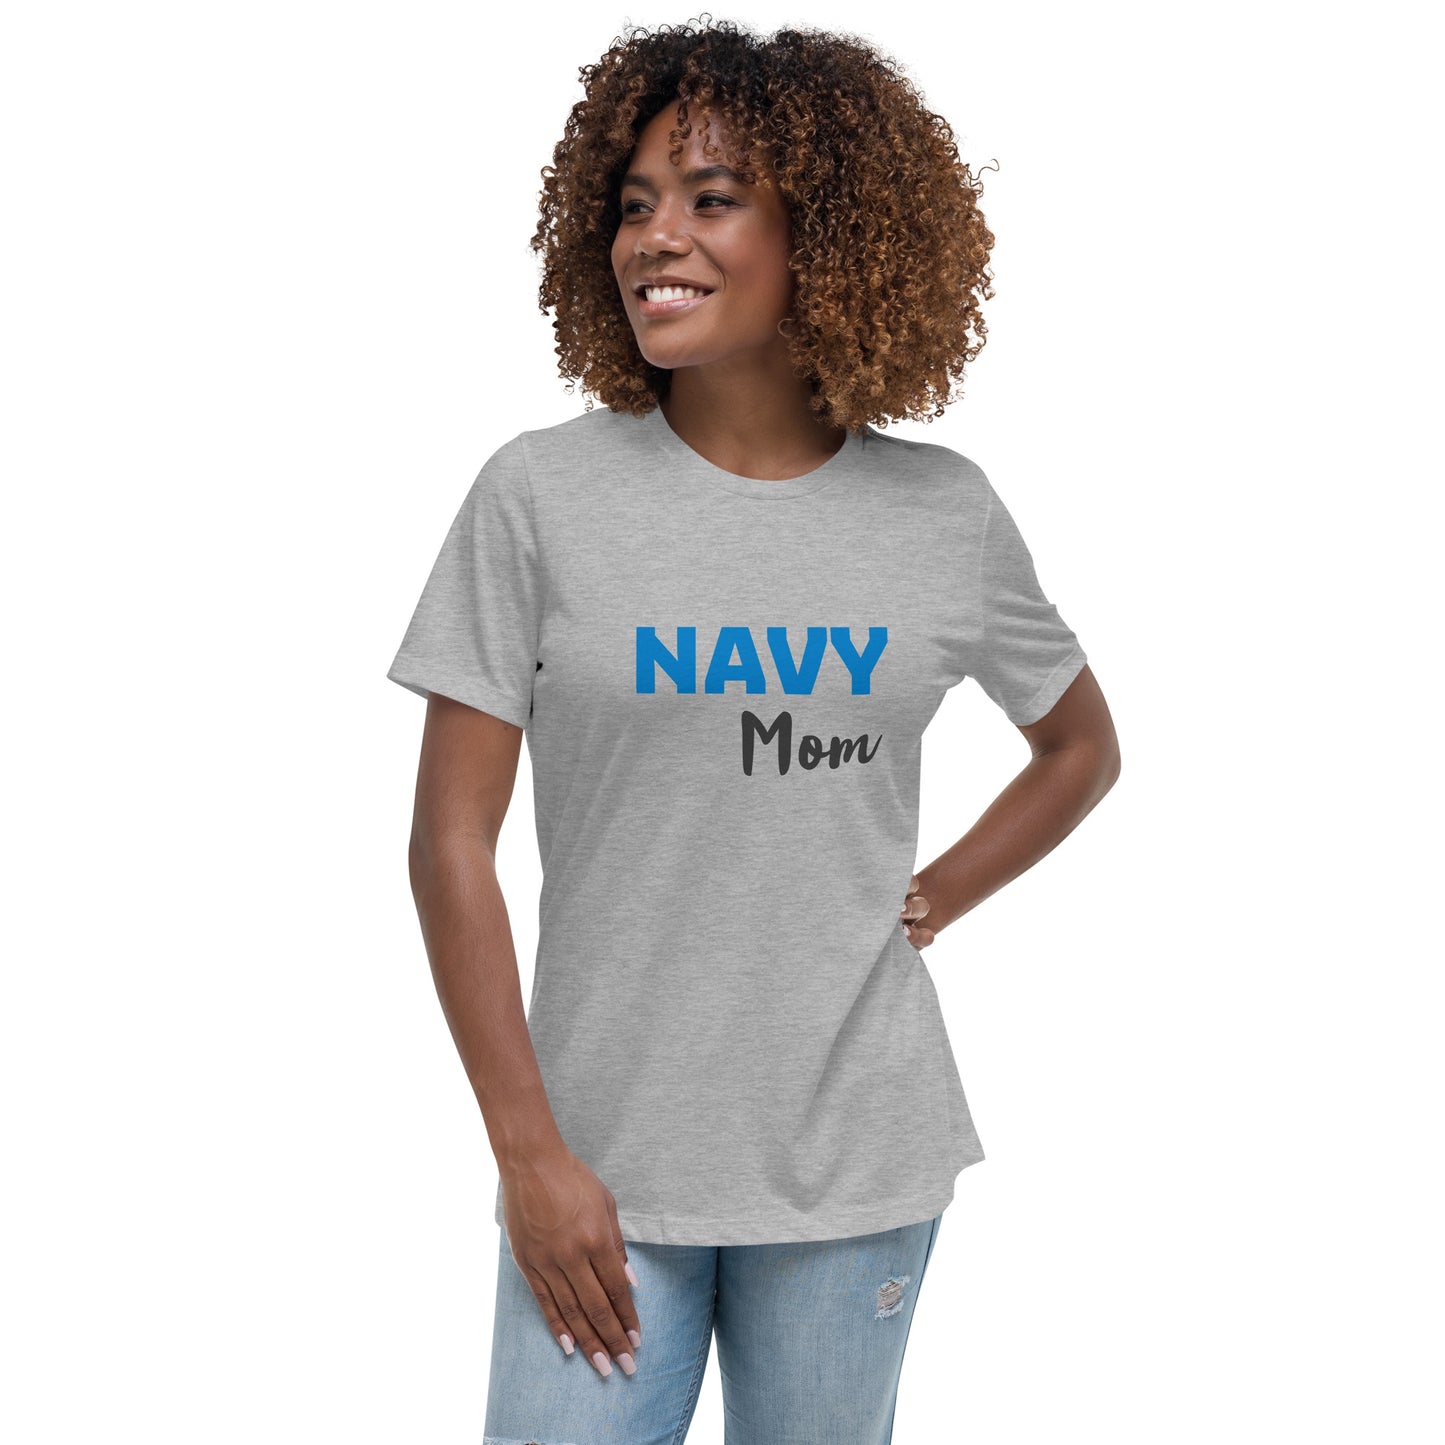 Navy Mom Printed T-Shirt